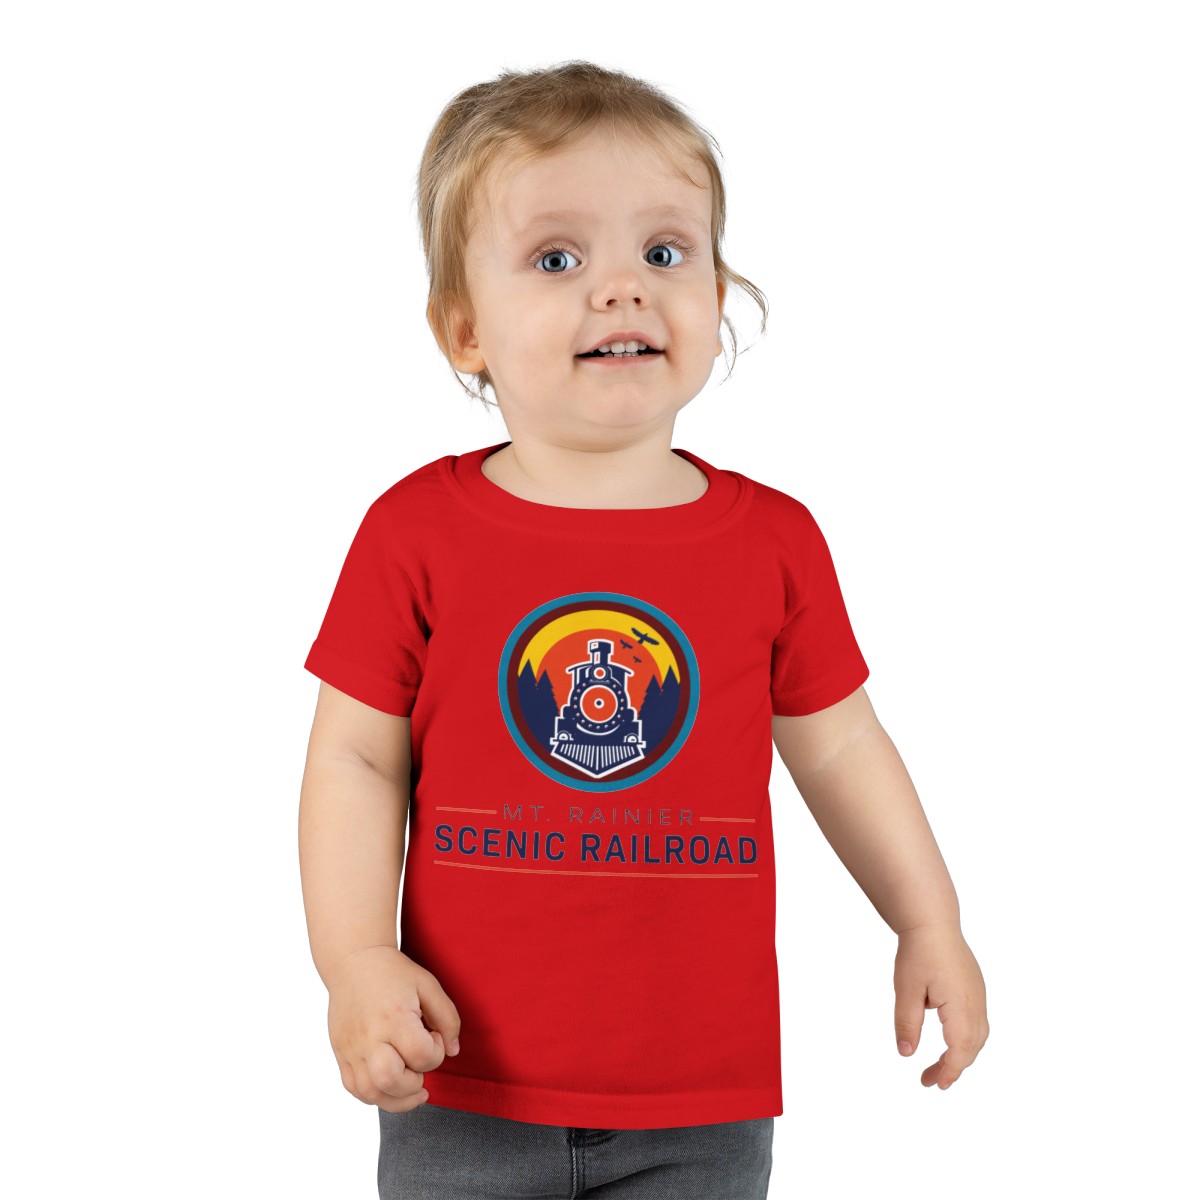 Toddler T-shirt product main image